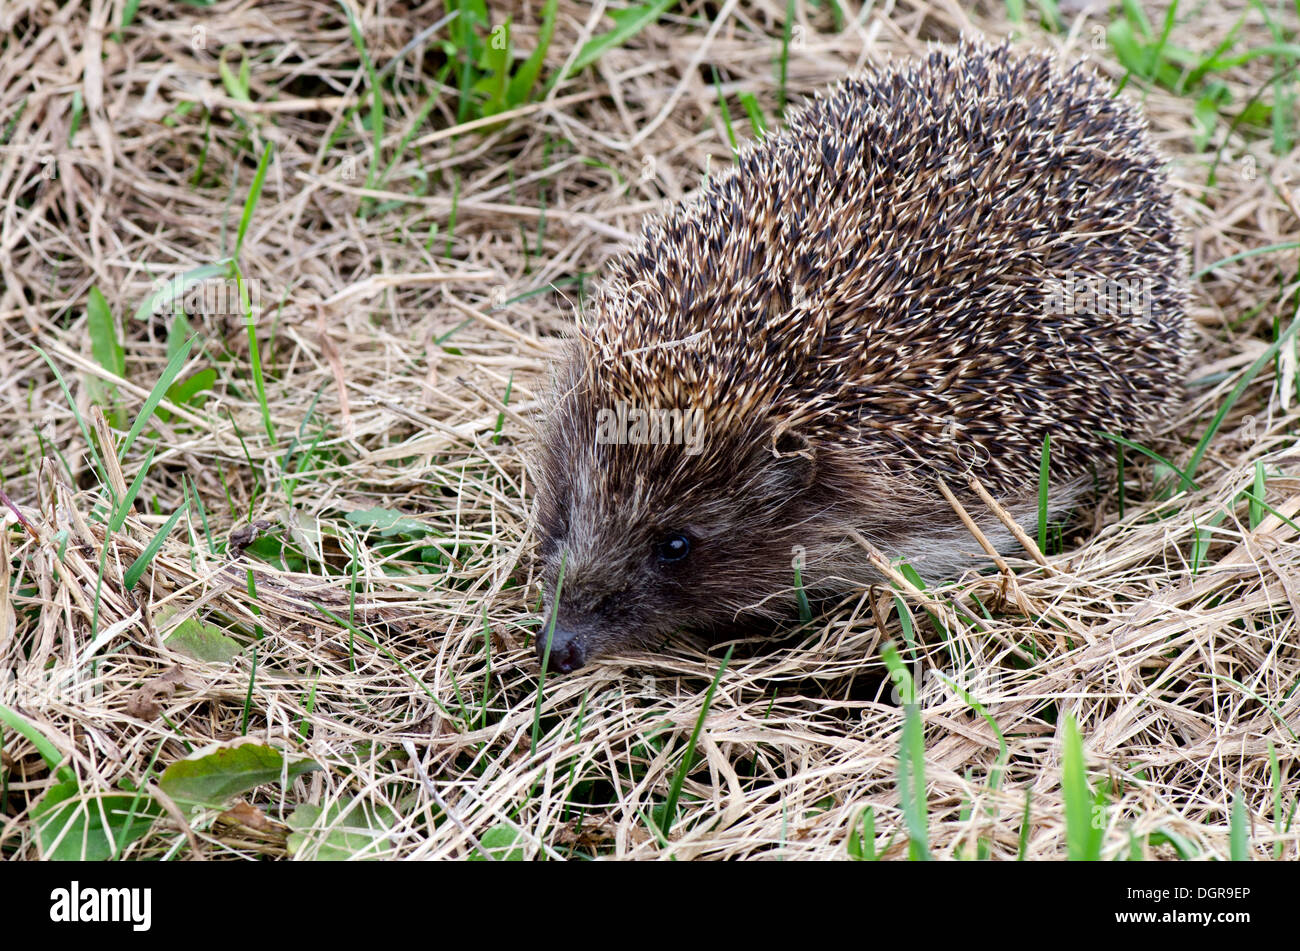 Hedgehog dans une herbe Banque D'Images